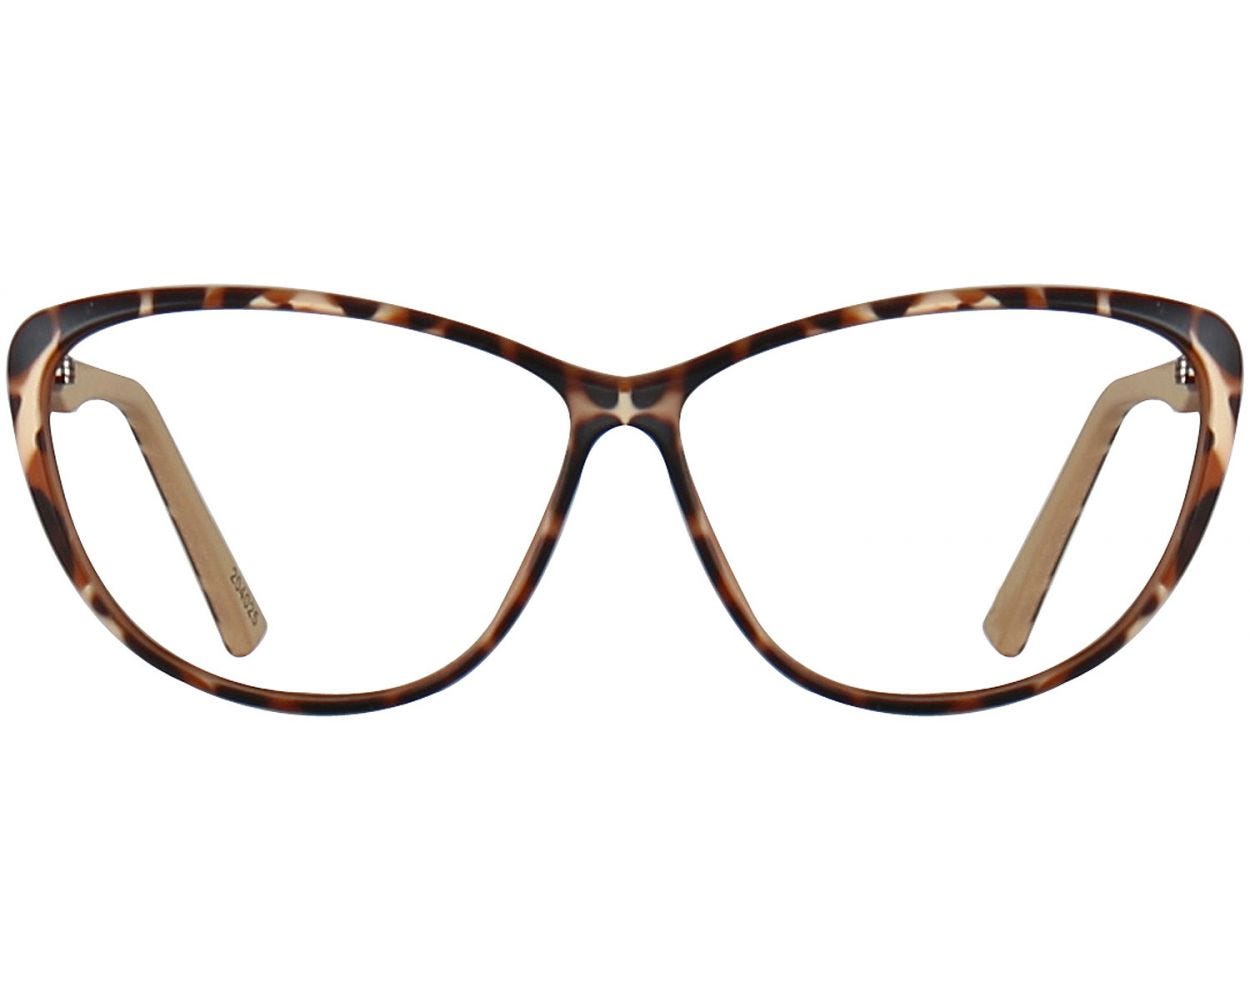 wooden cateye glasses frames